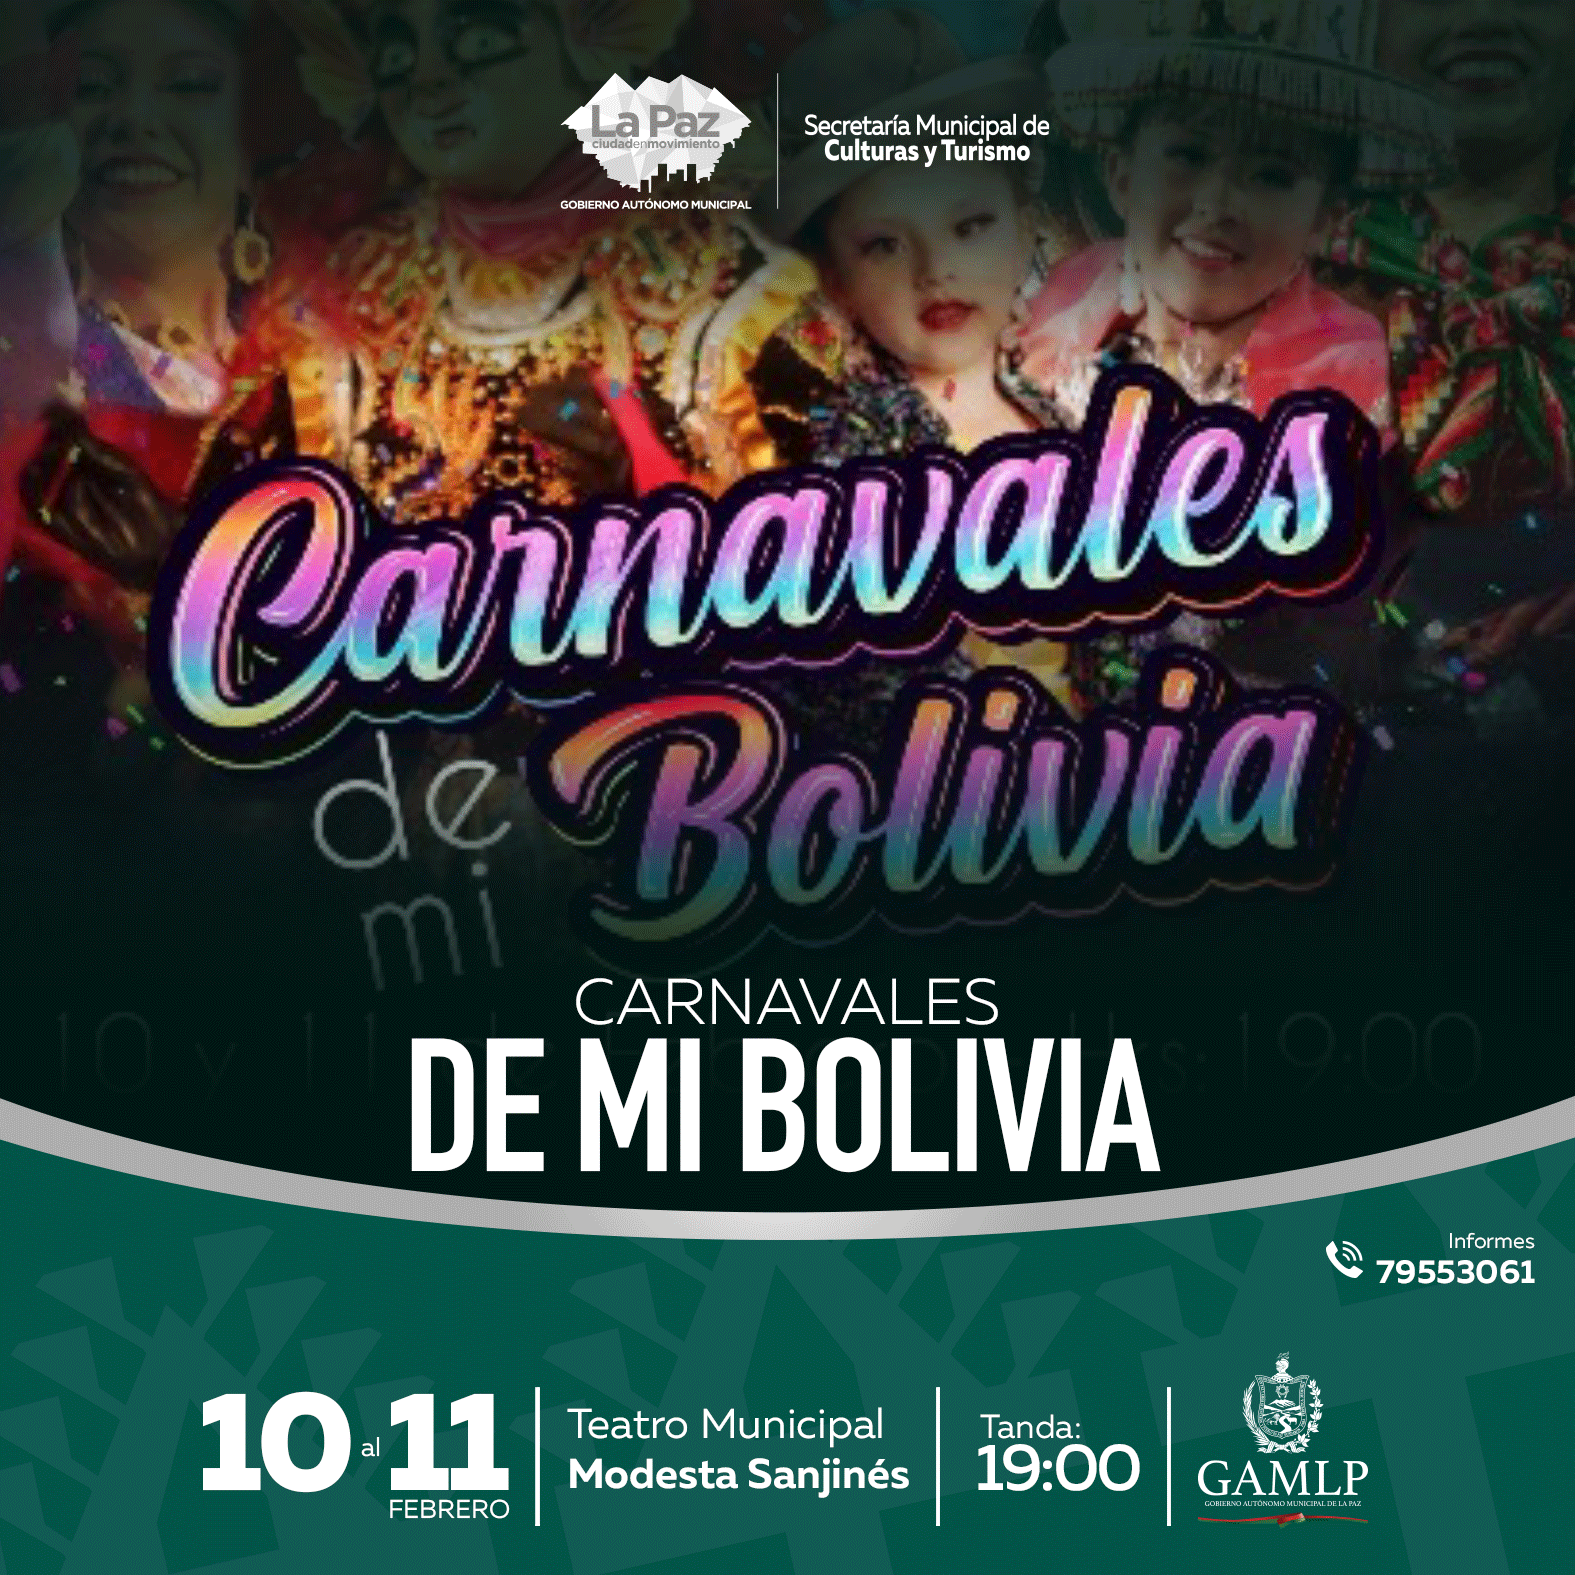 CARNAVALES DE MI BOLIVIA